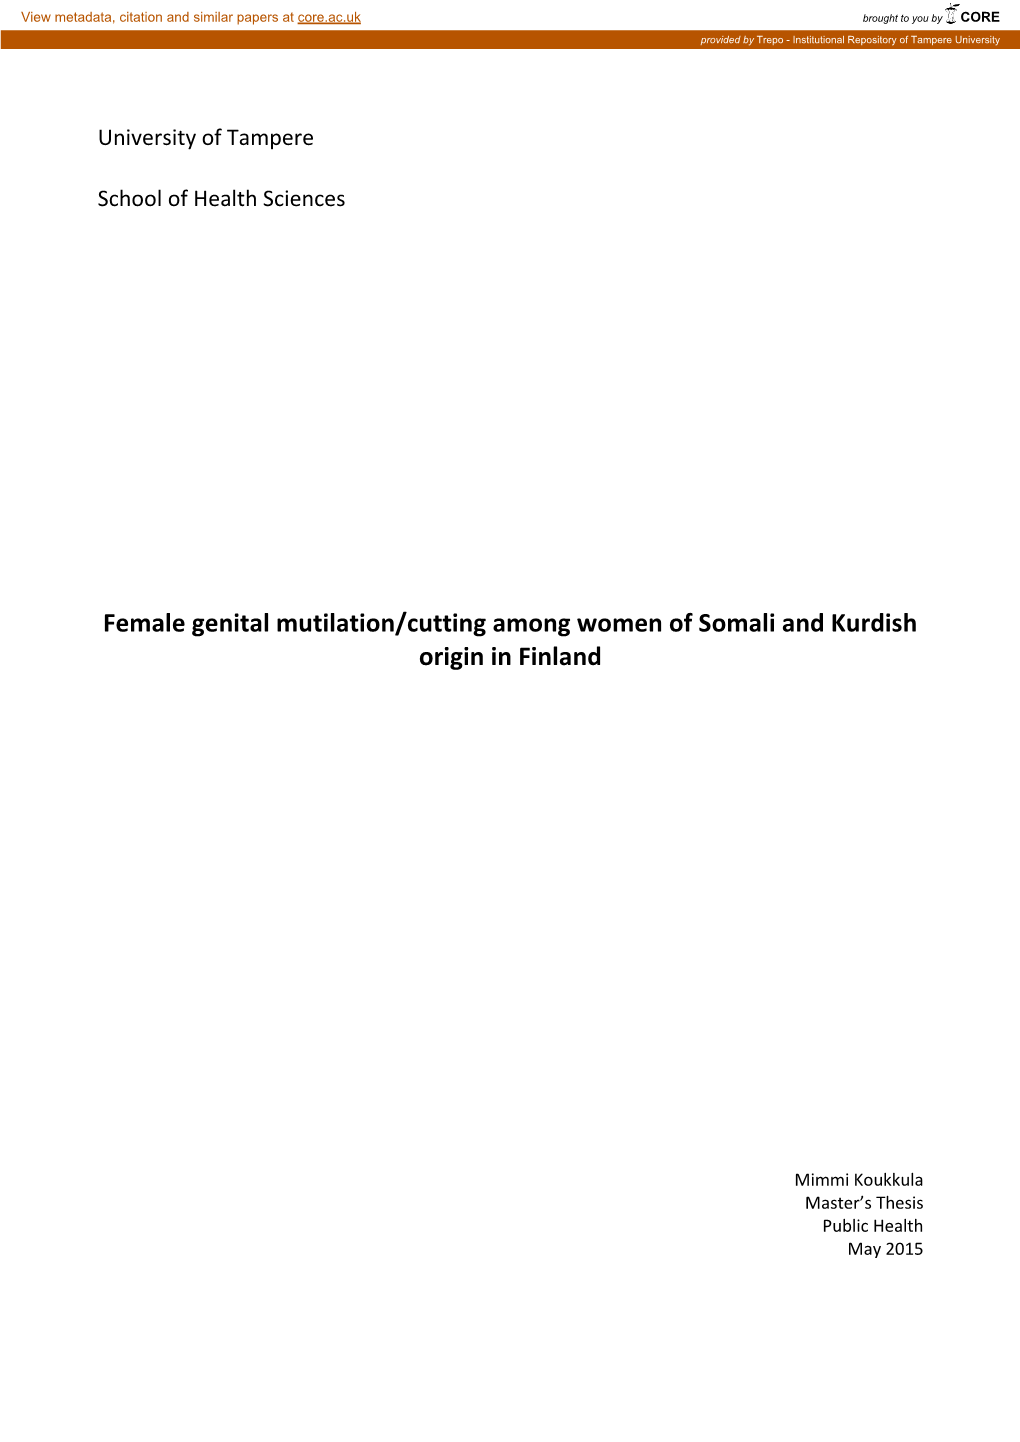 Female Genital Mutilation/Cutting Among Women of Somali and Kurdish Origin in Finland